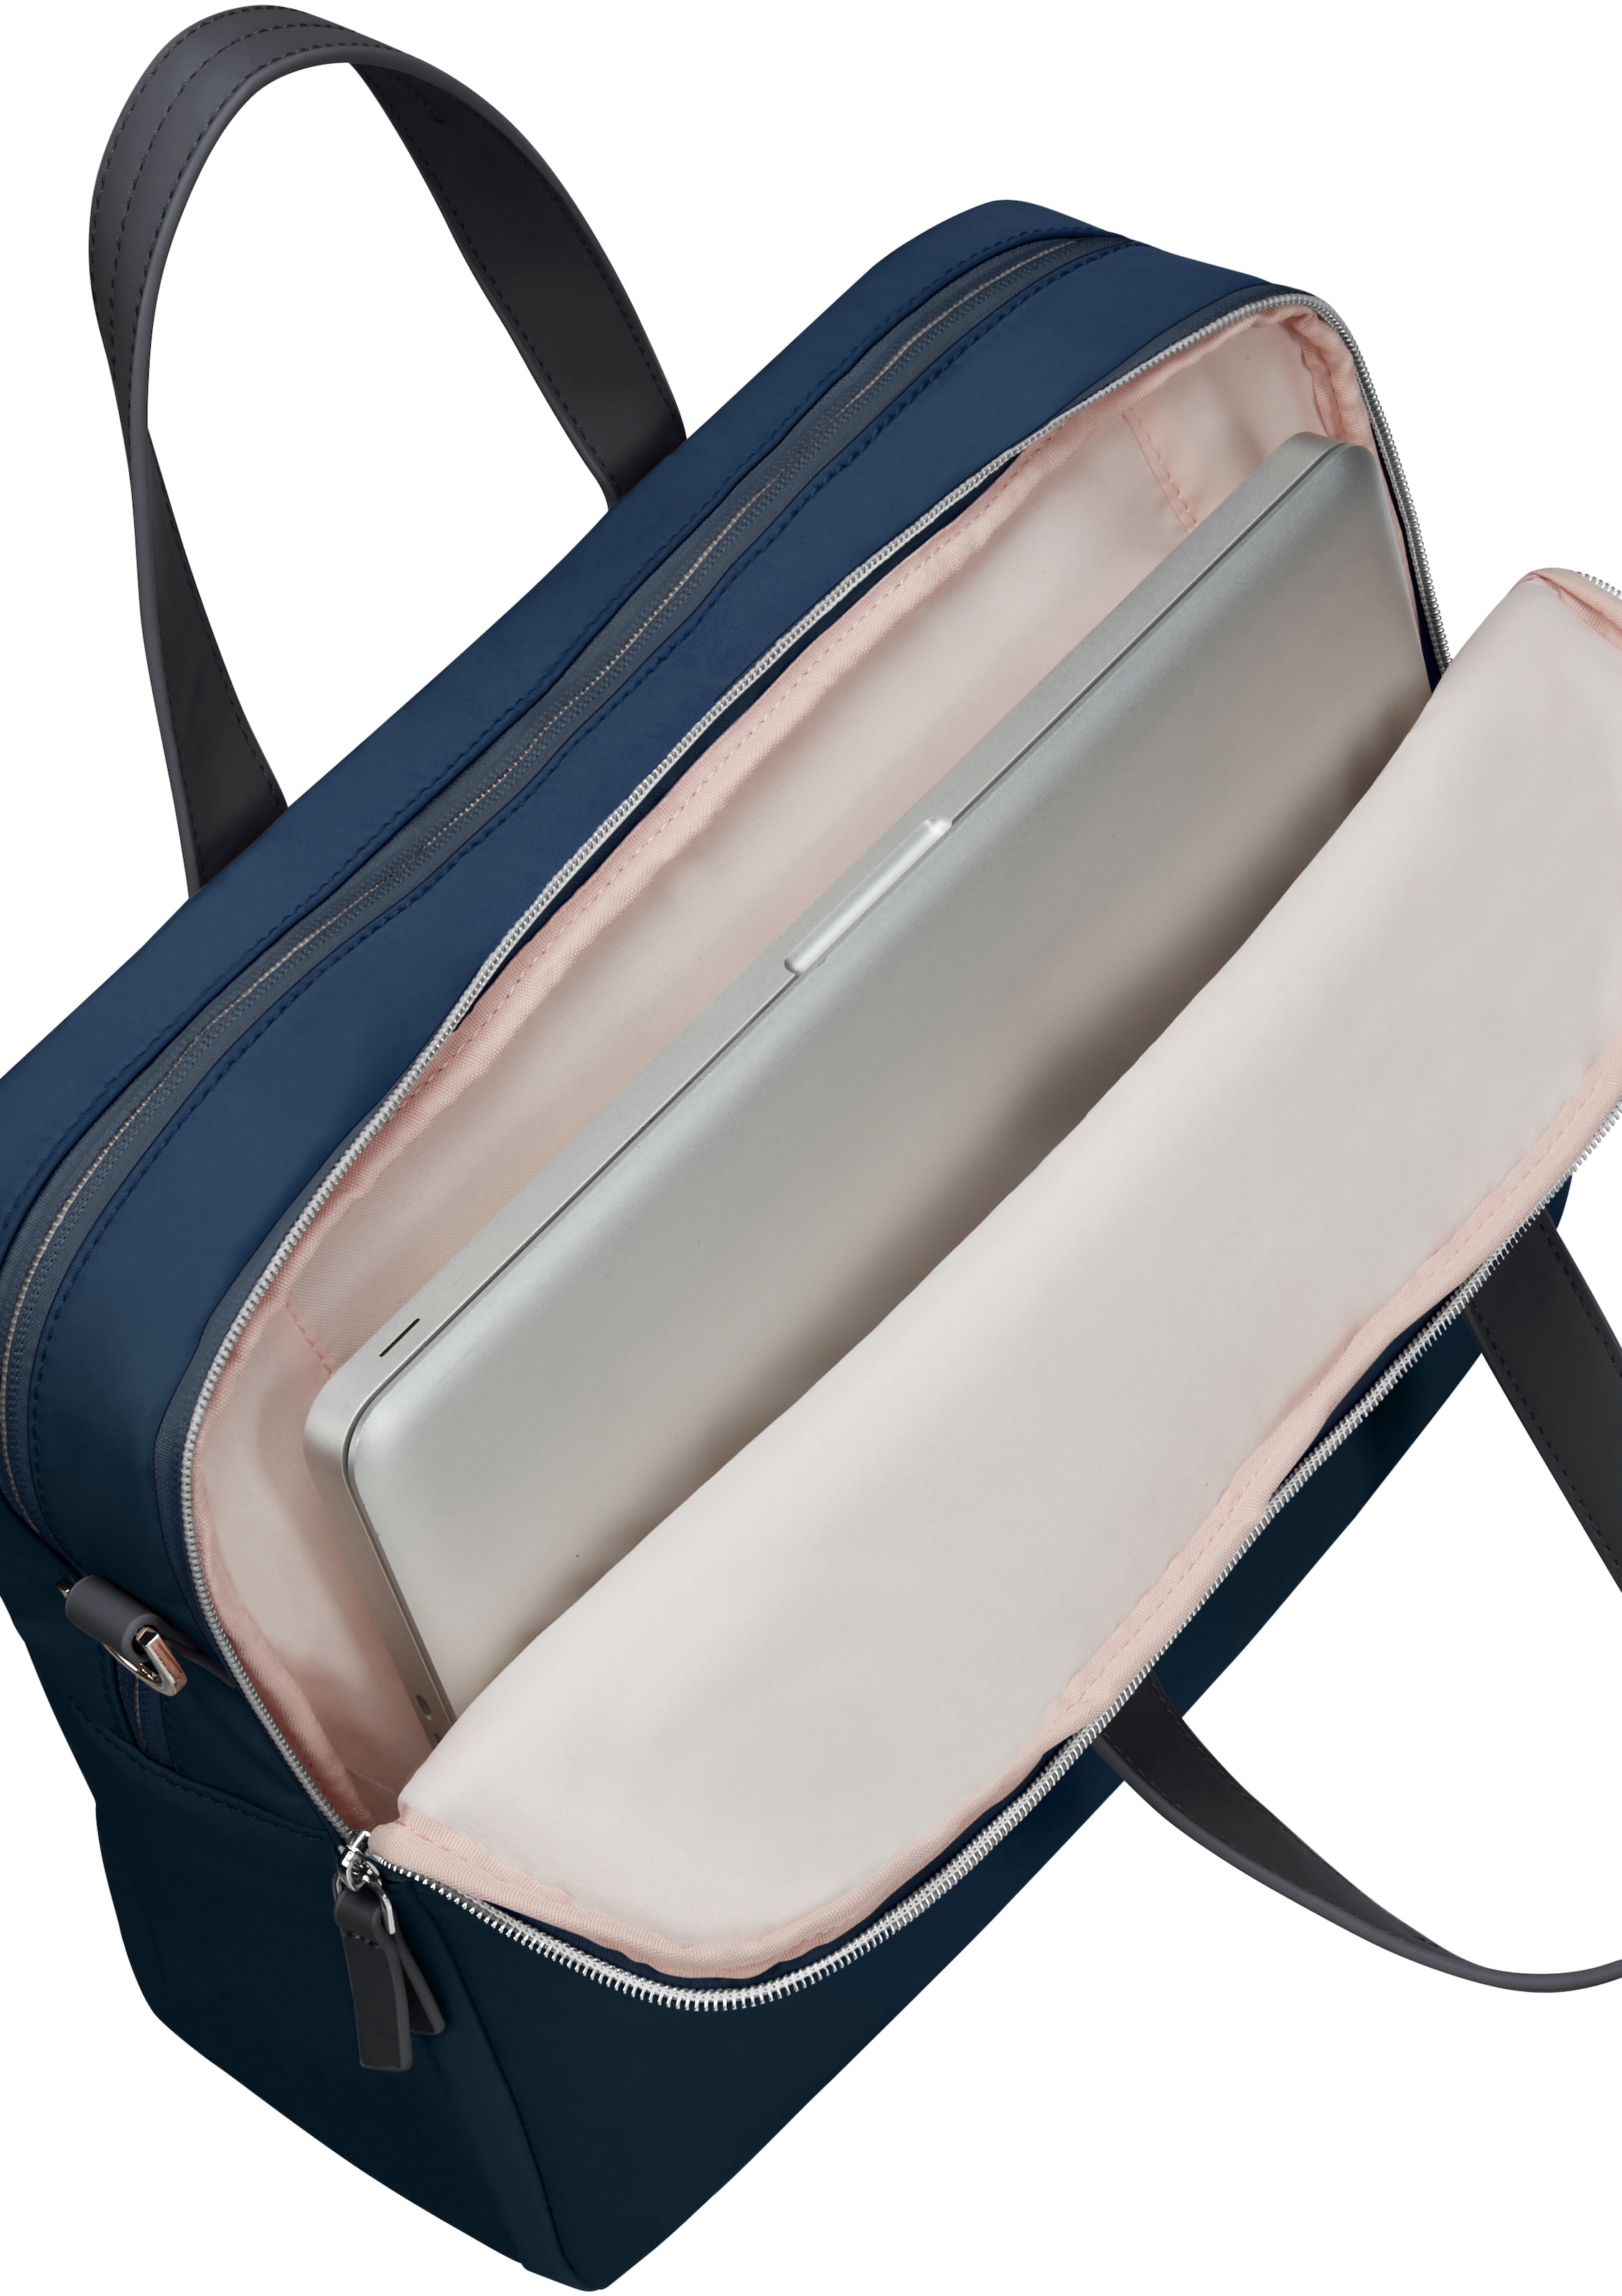 Samsonite Laptoptasche »Eco Wave«, Laptop-Case Laptop-Bag mit 15,6-Zoll Laptopfach